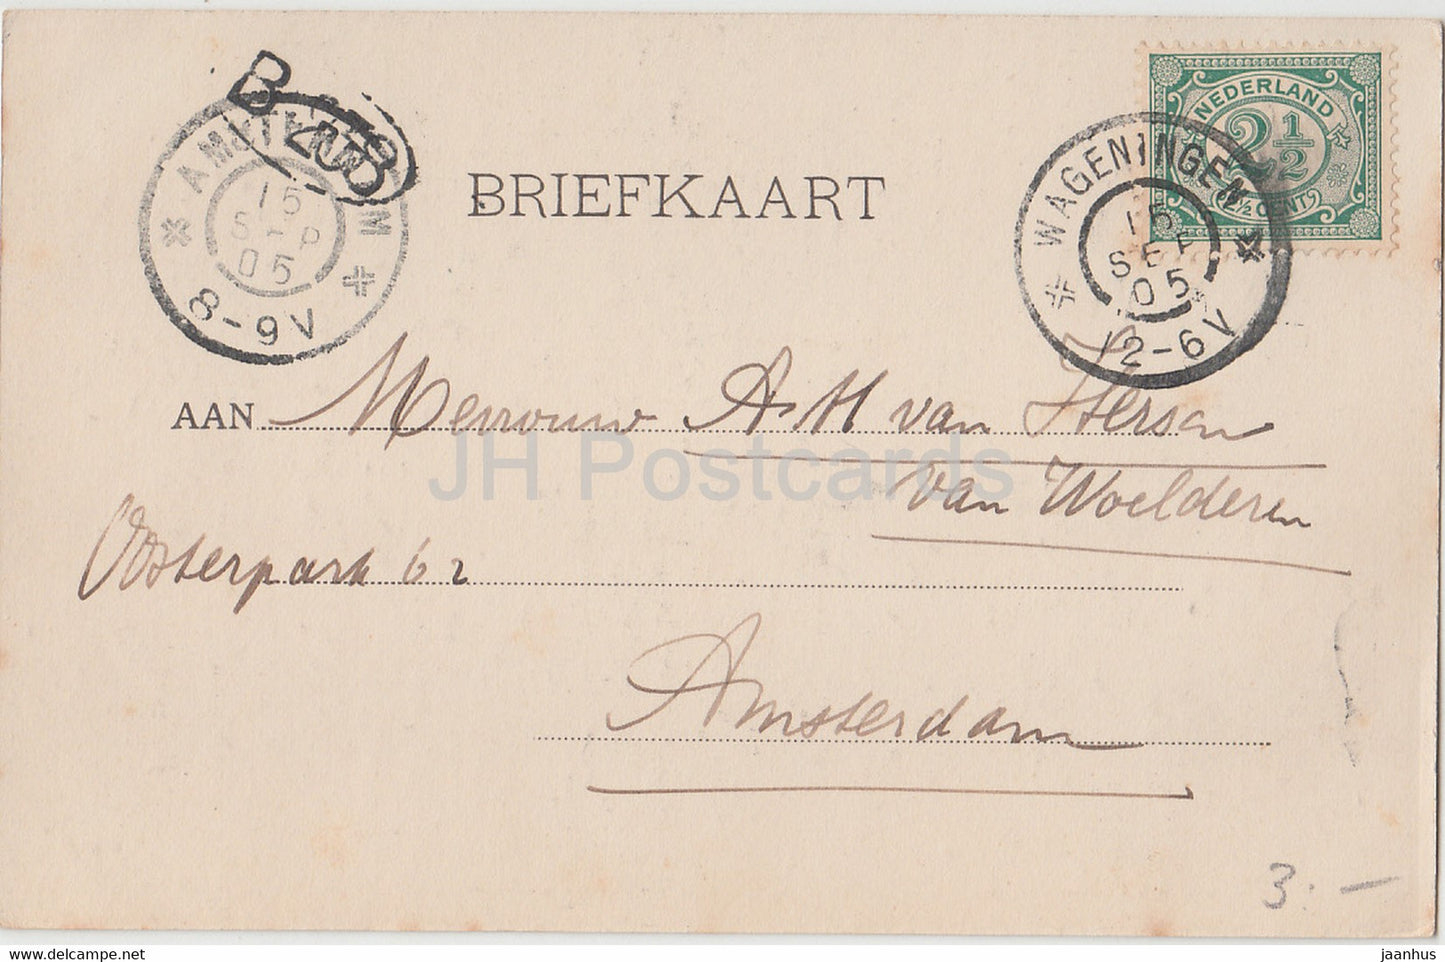 Wageningen - Holleweg - 918 - carte postale ancienne - 1905 - Pays-Bas - utilisé